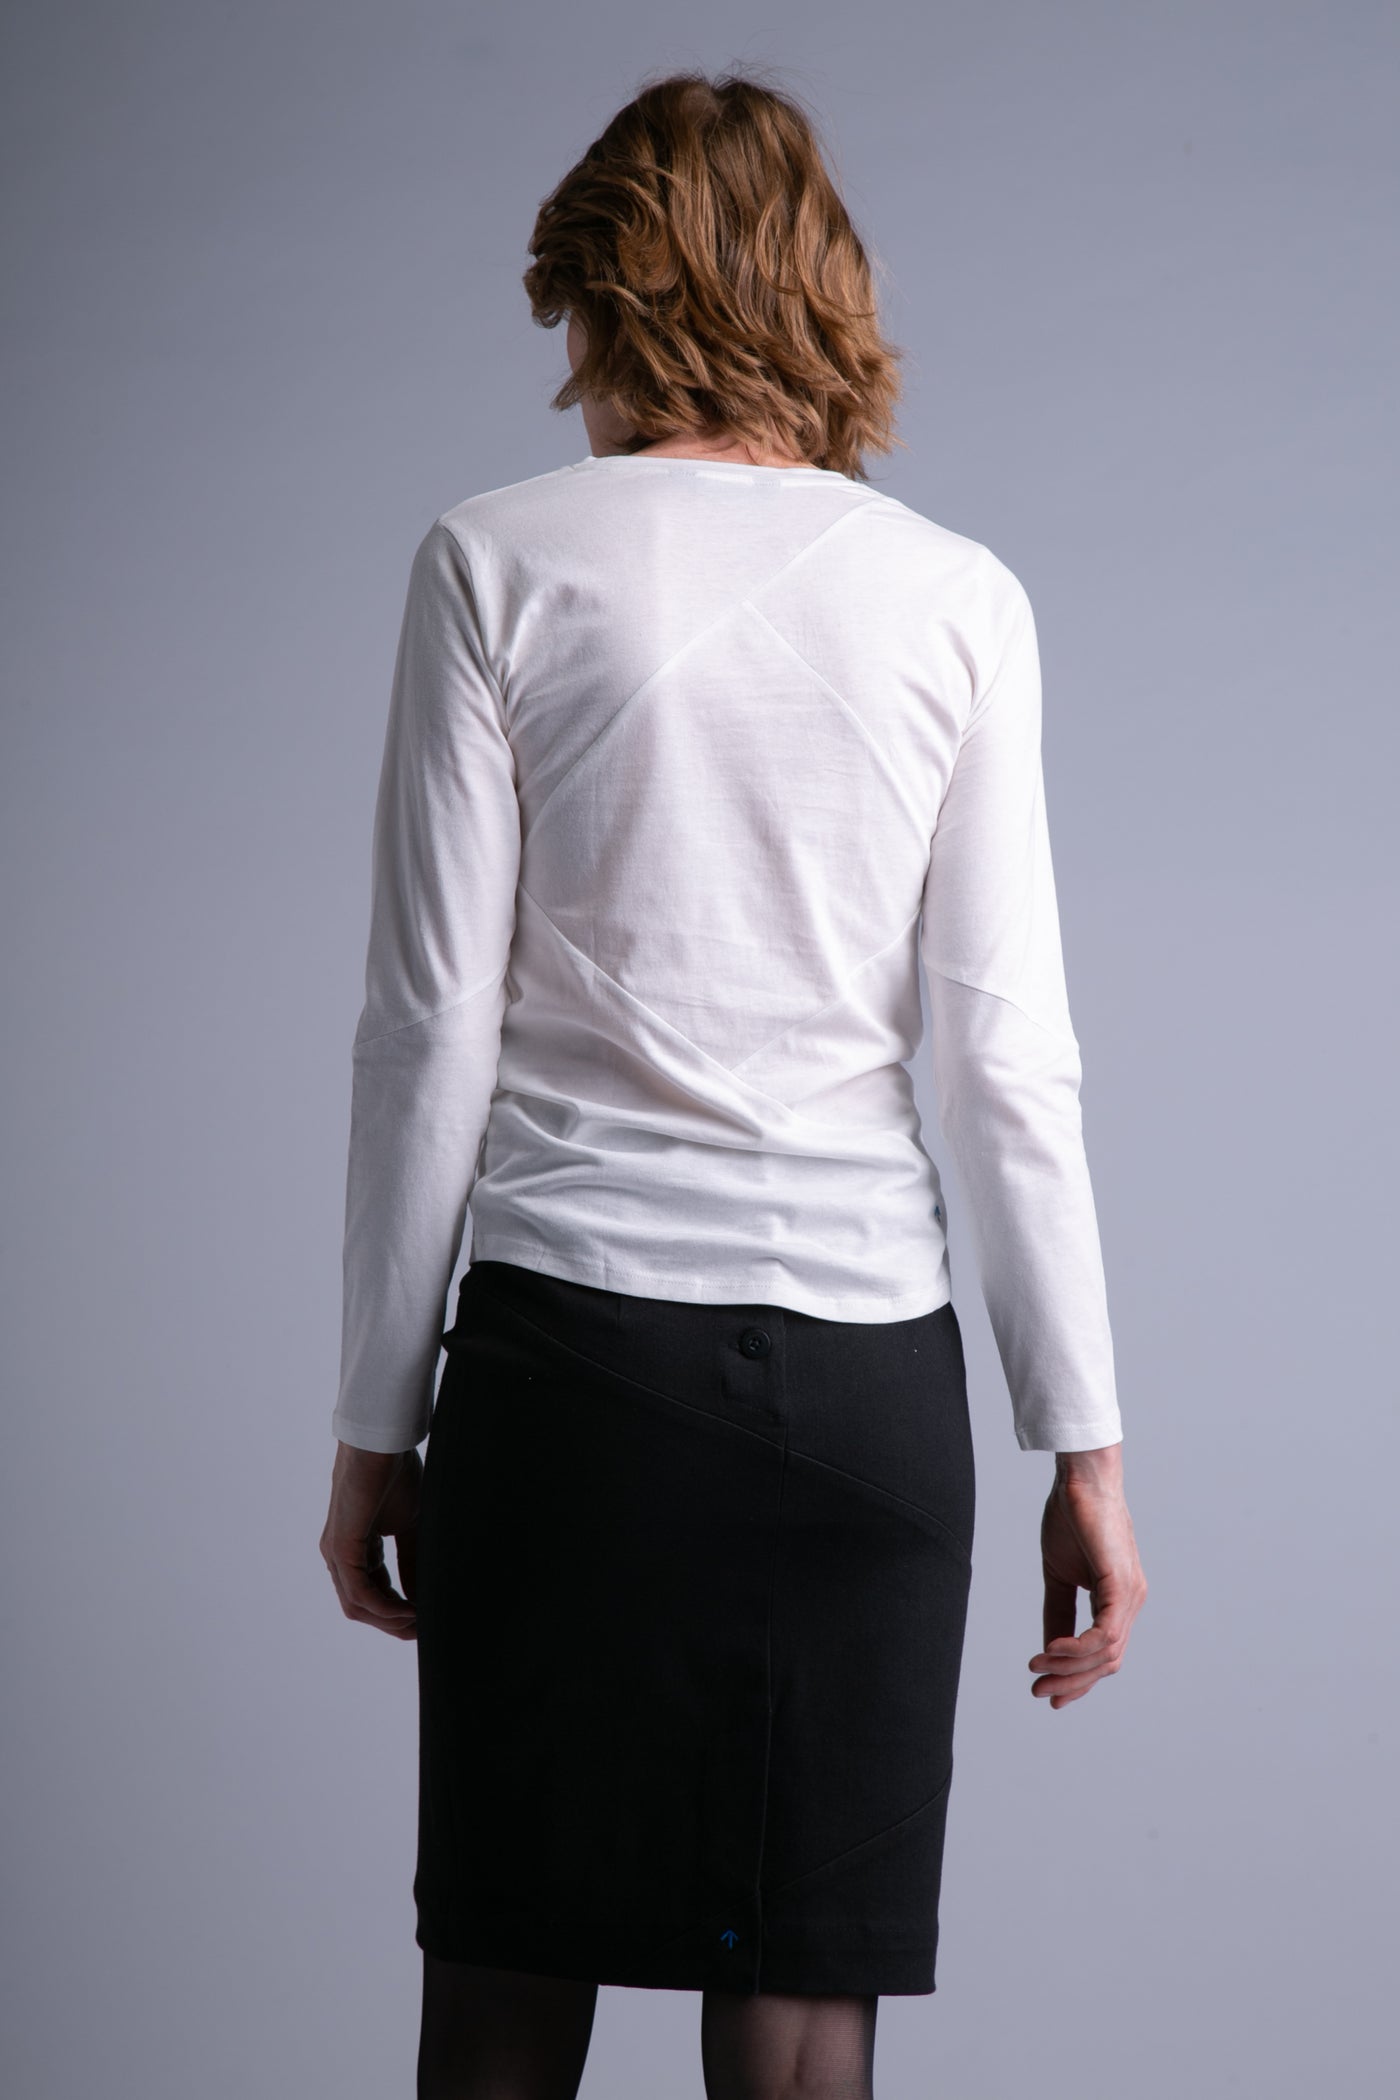 Up-shirt for women, long sleeves | White, dark grey